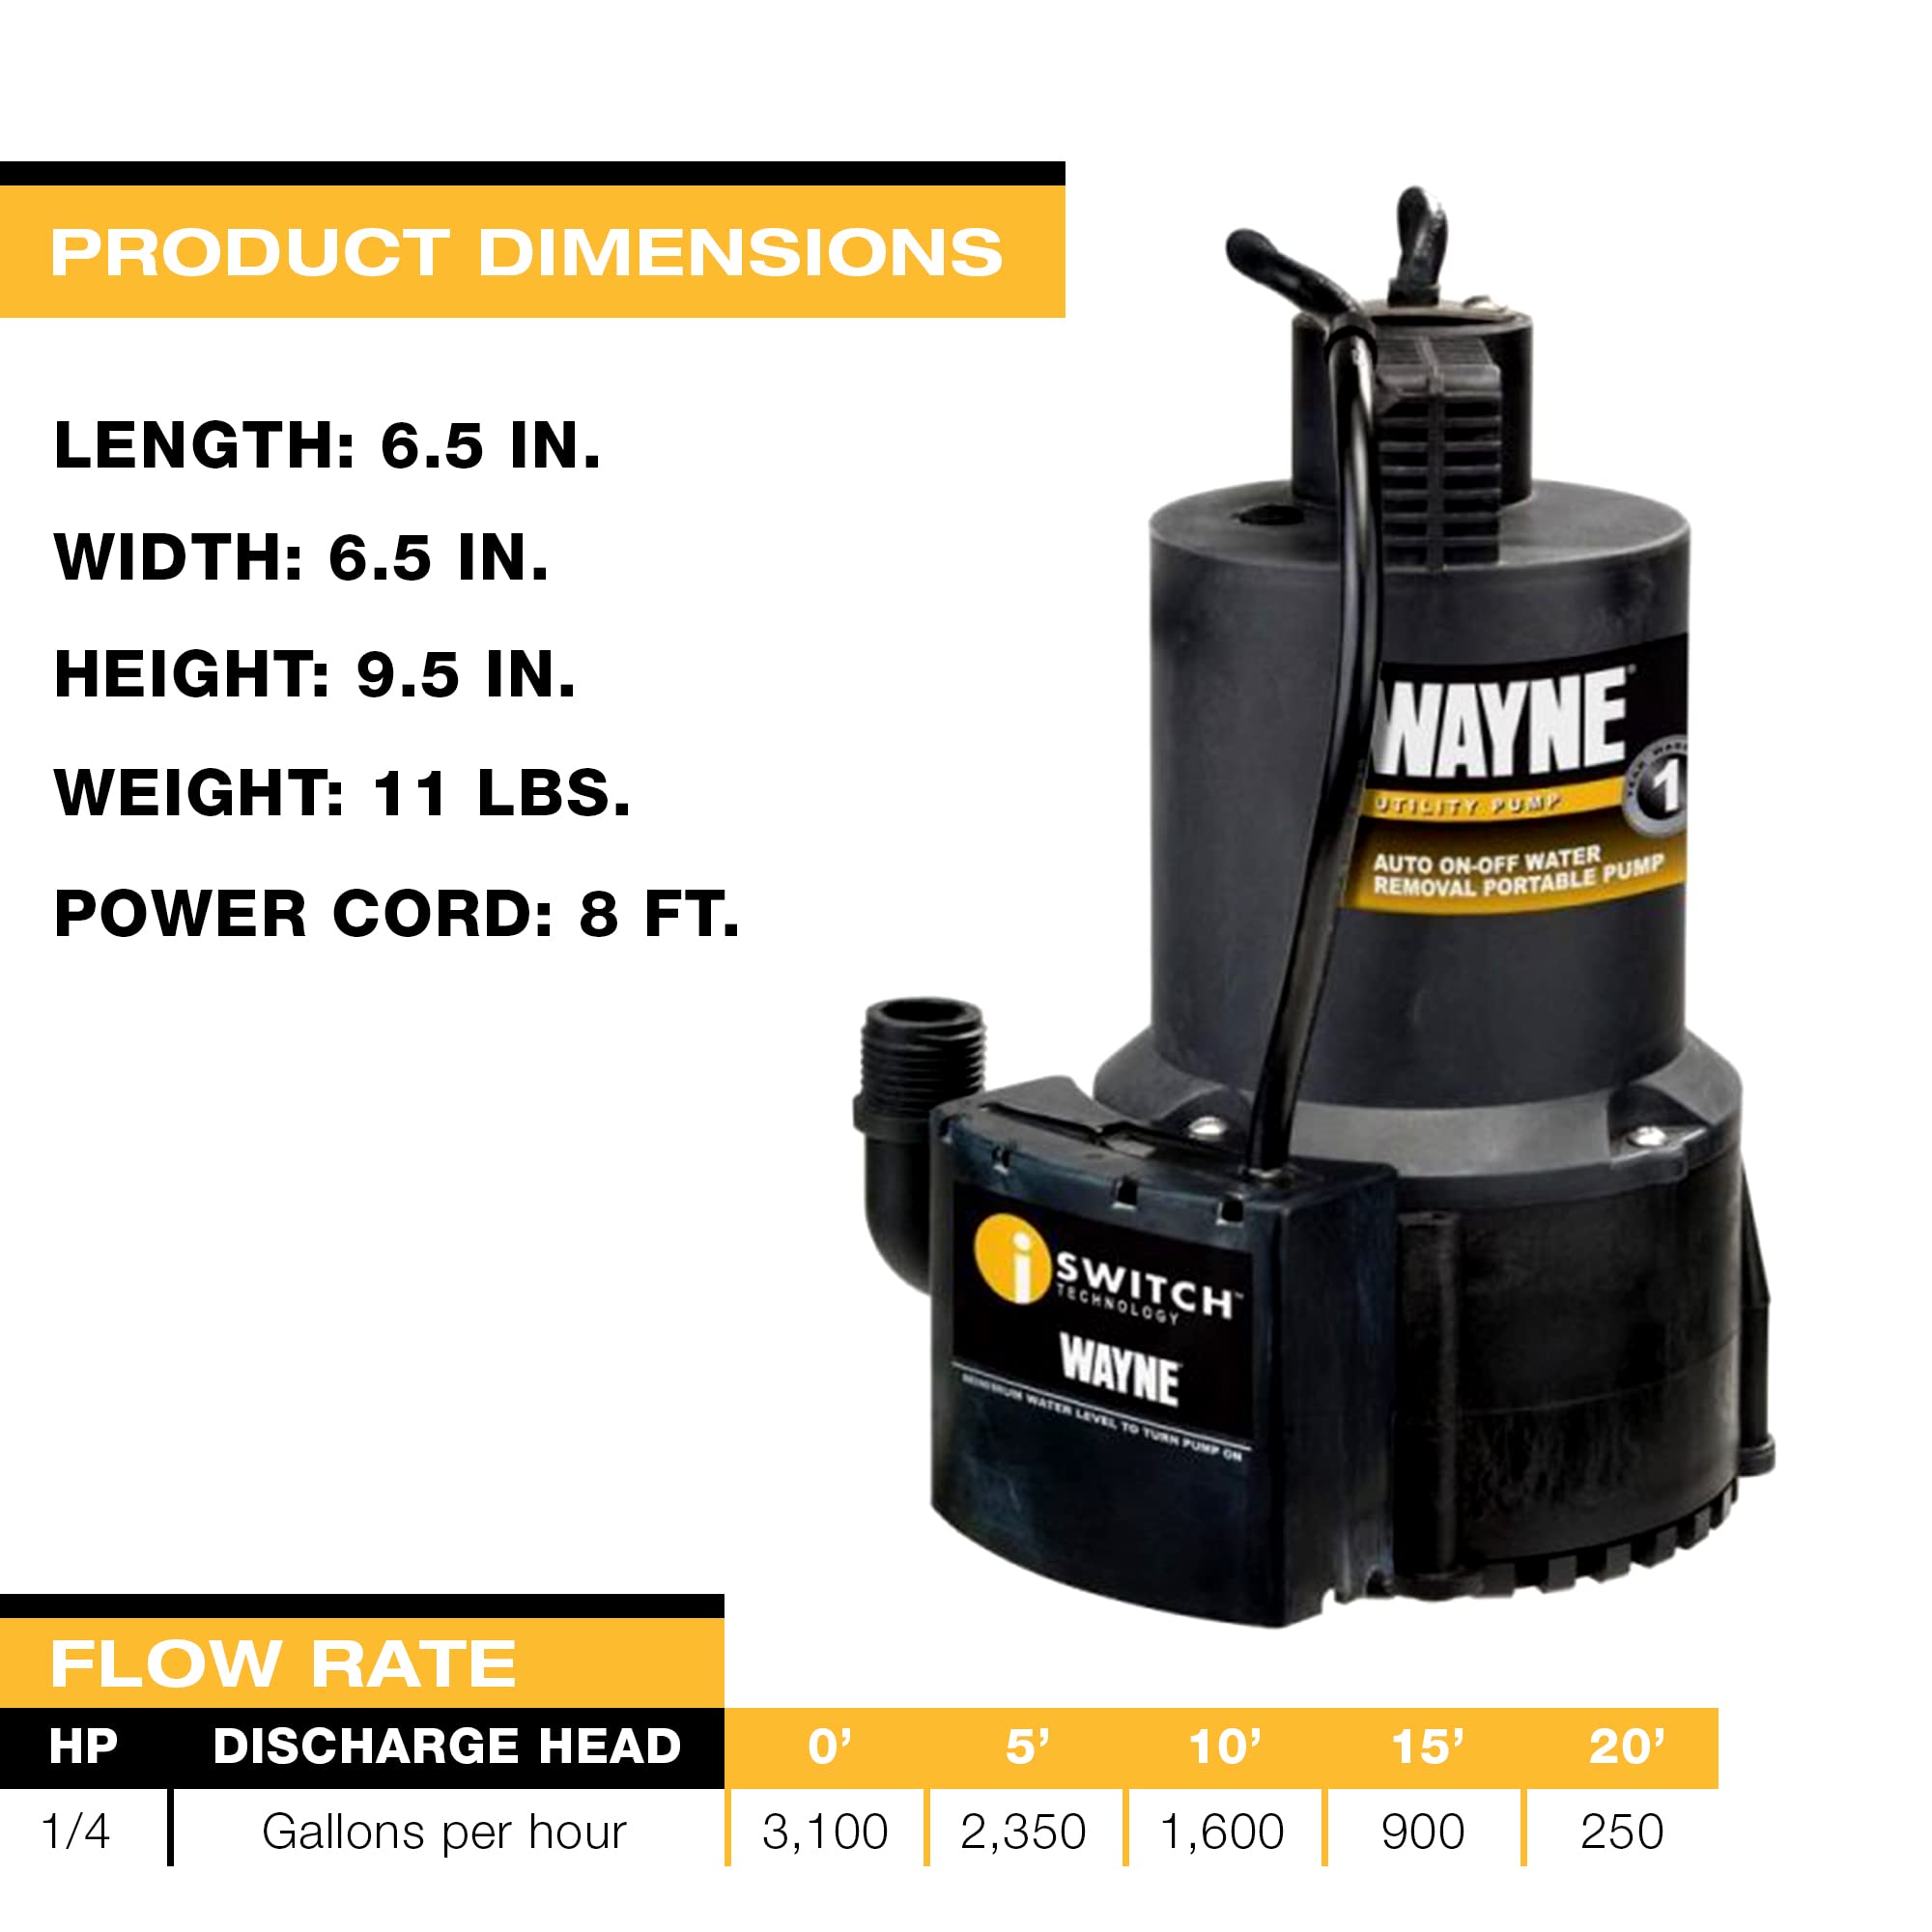 Wayne EEAUP250 1/4 HP Reinforced Thermoplastic Submersible Multi-Use Pump, 1, Black